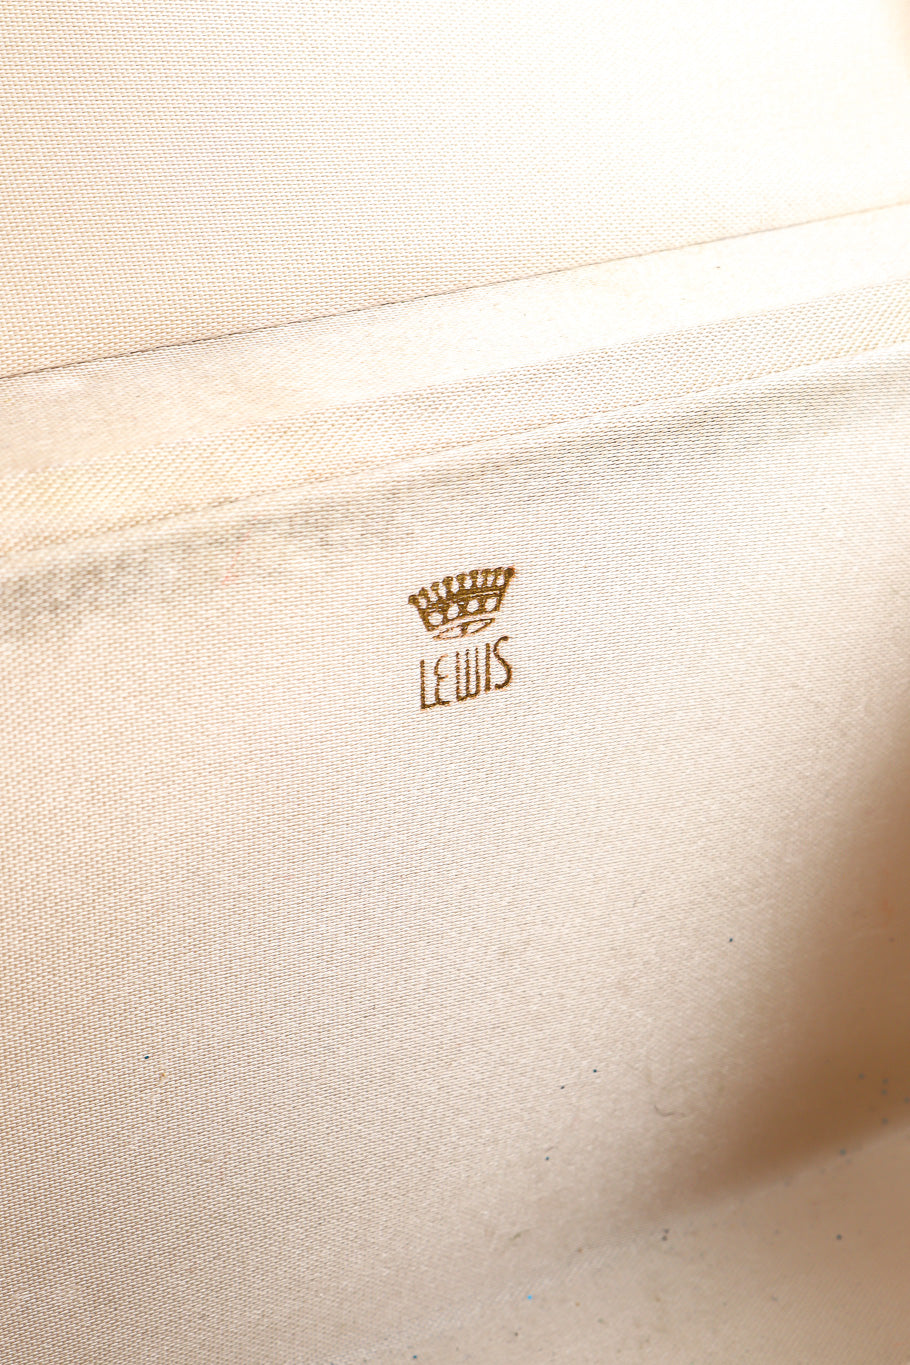 Lewis silver leather mini box bag designer name printed @recessla